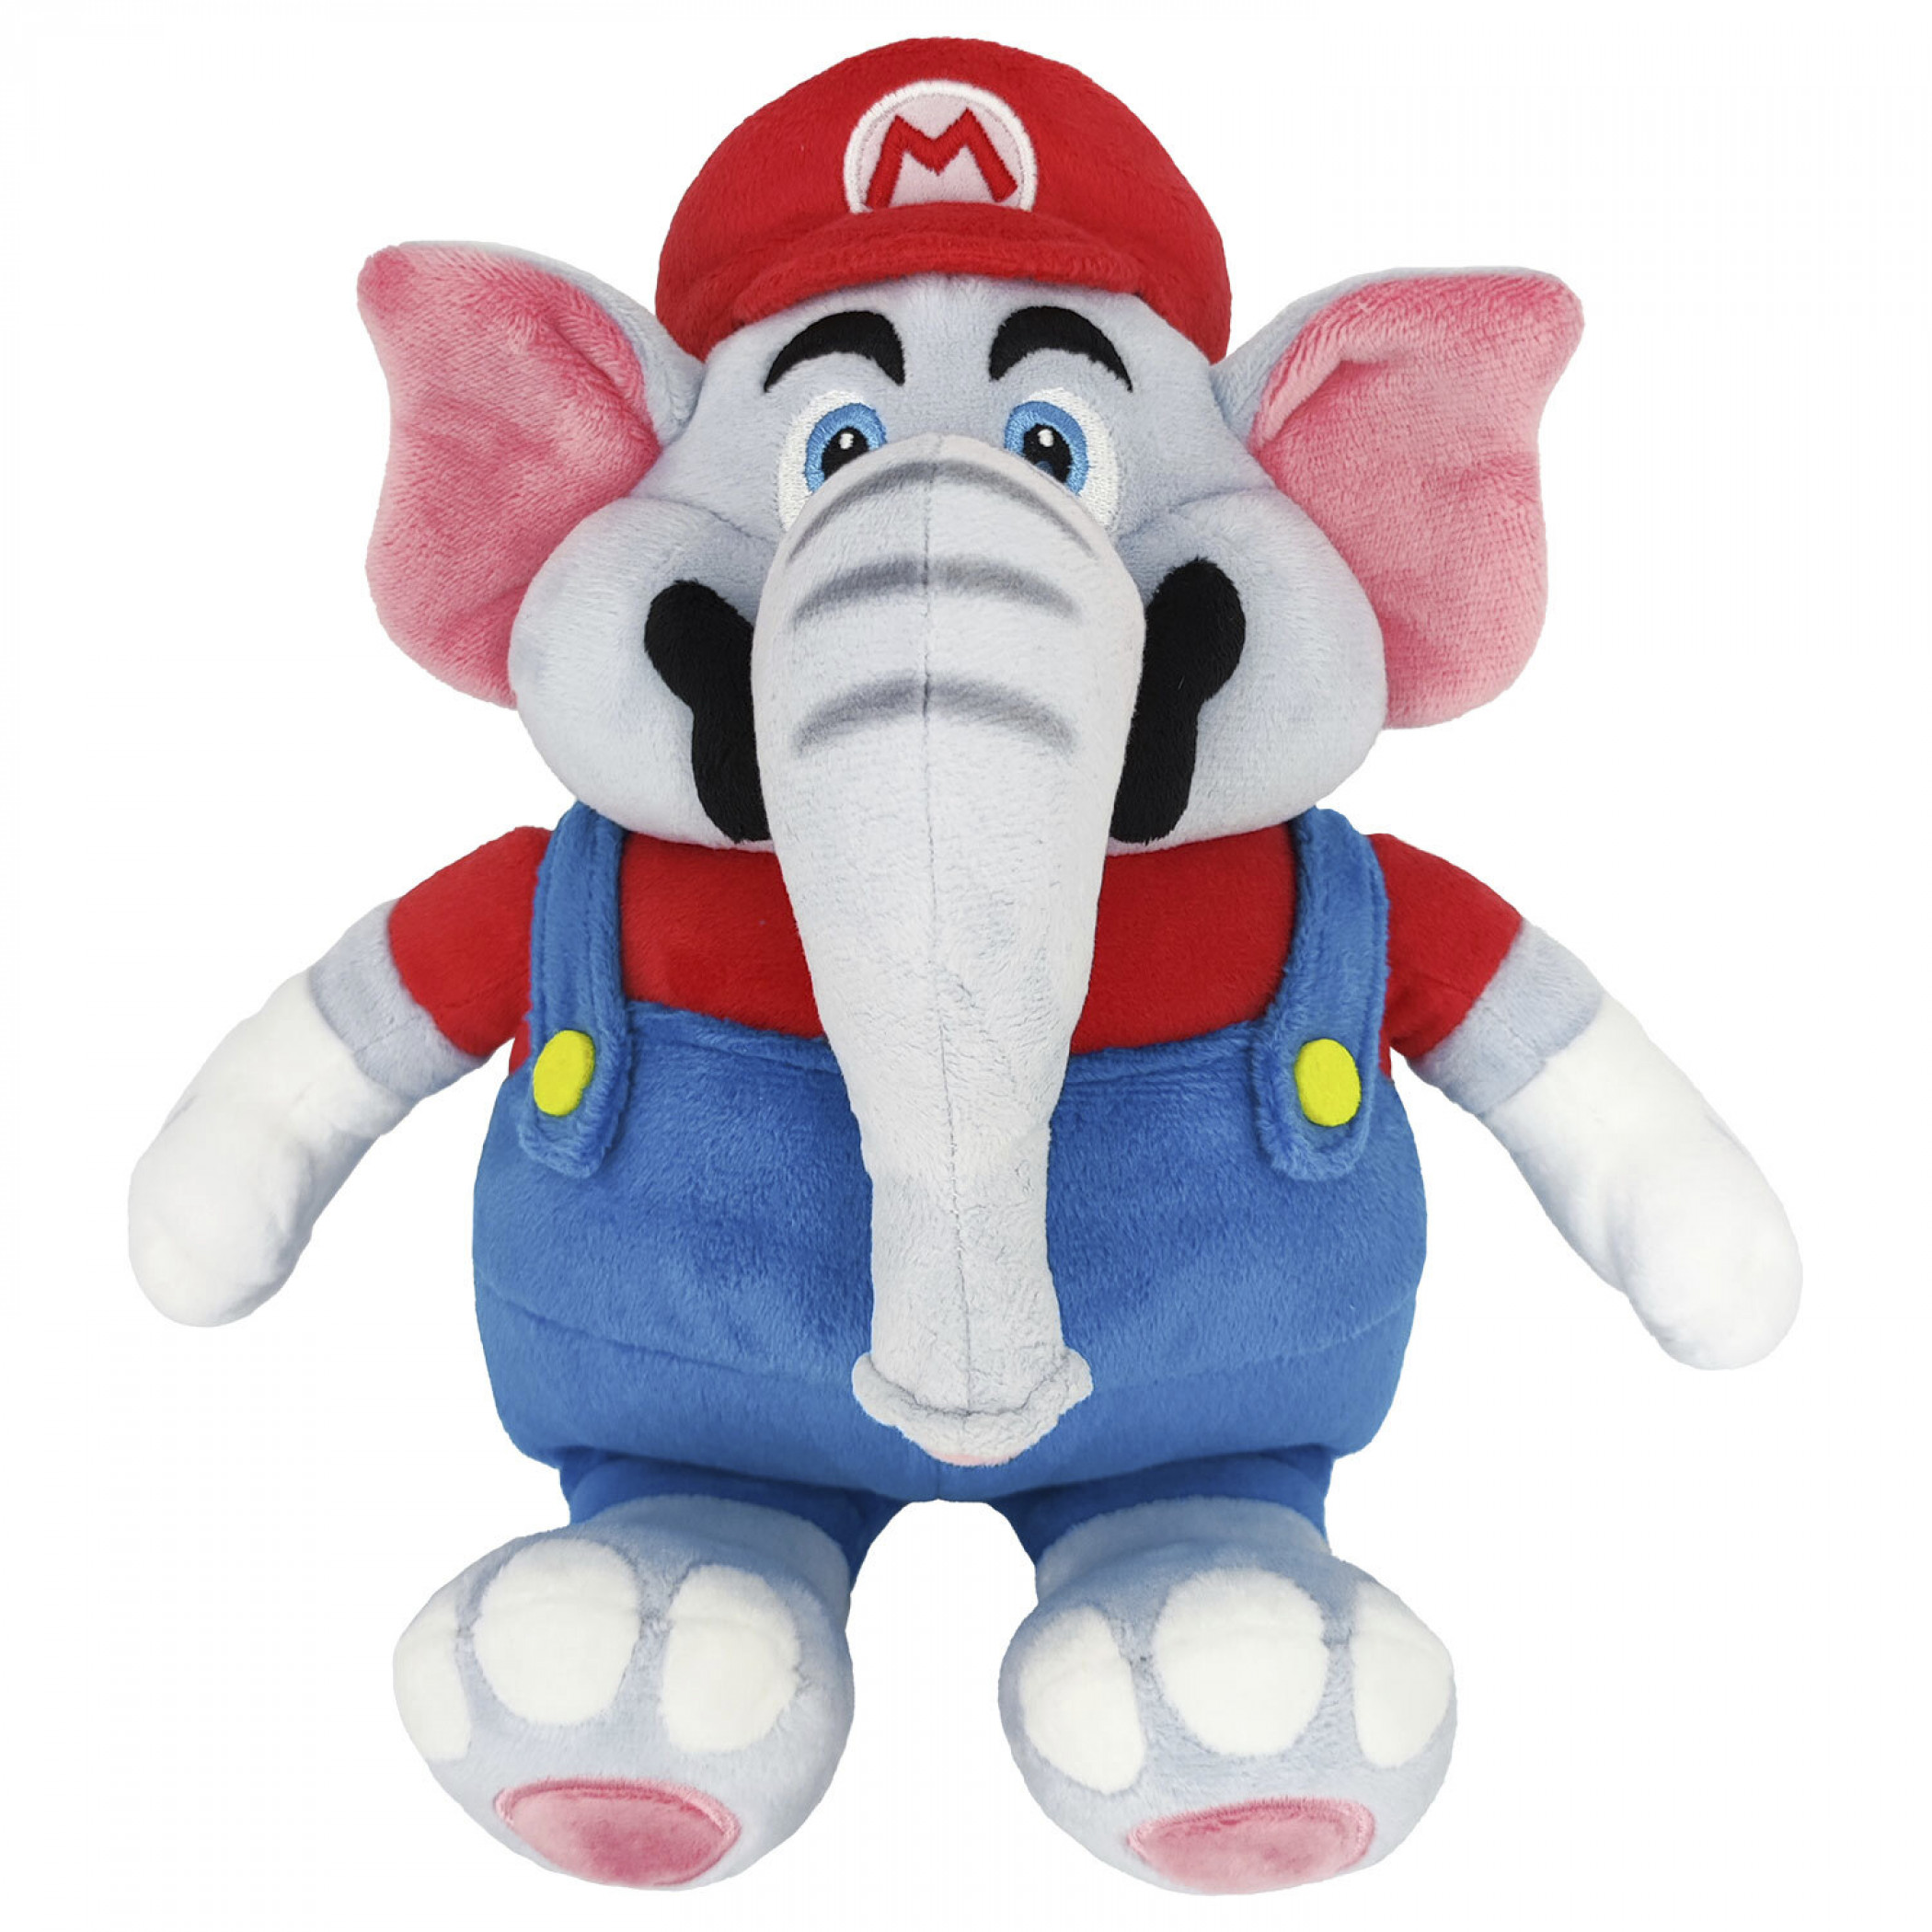 Super Mario Bros. Elephant Mario 10 Inch Plush Toy